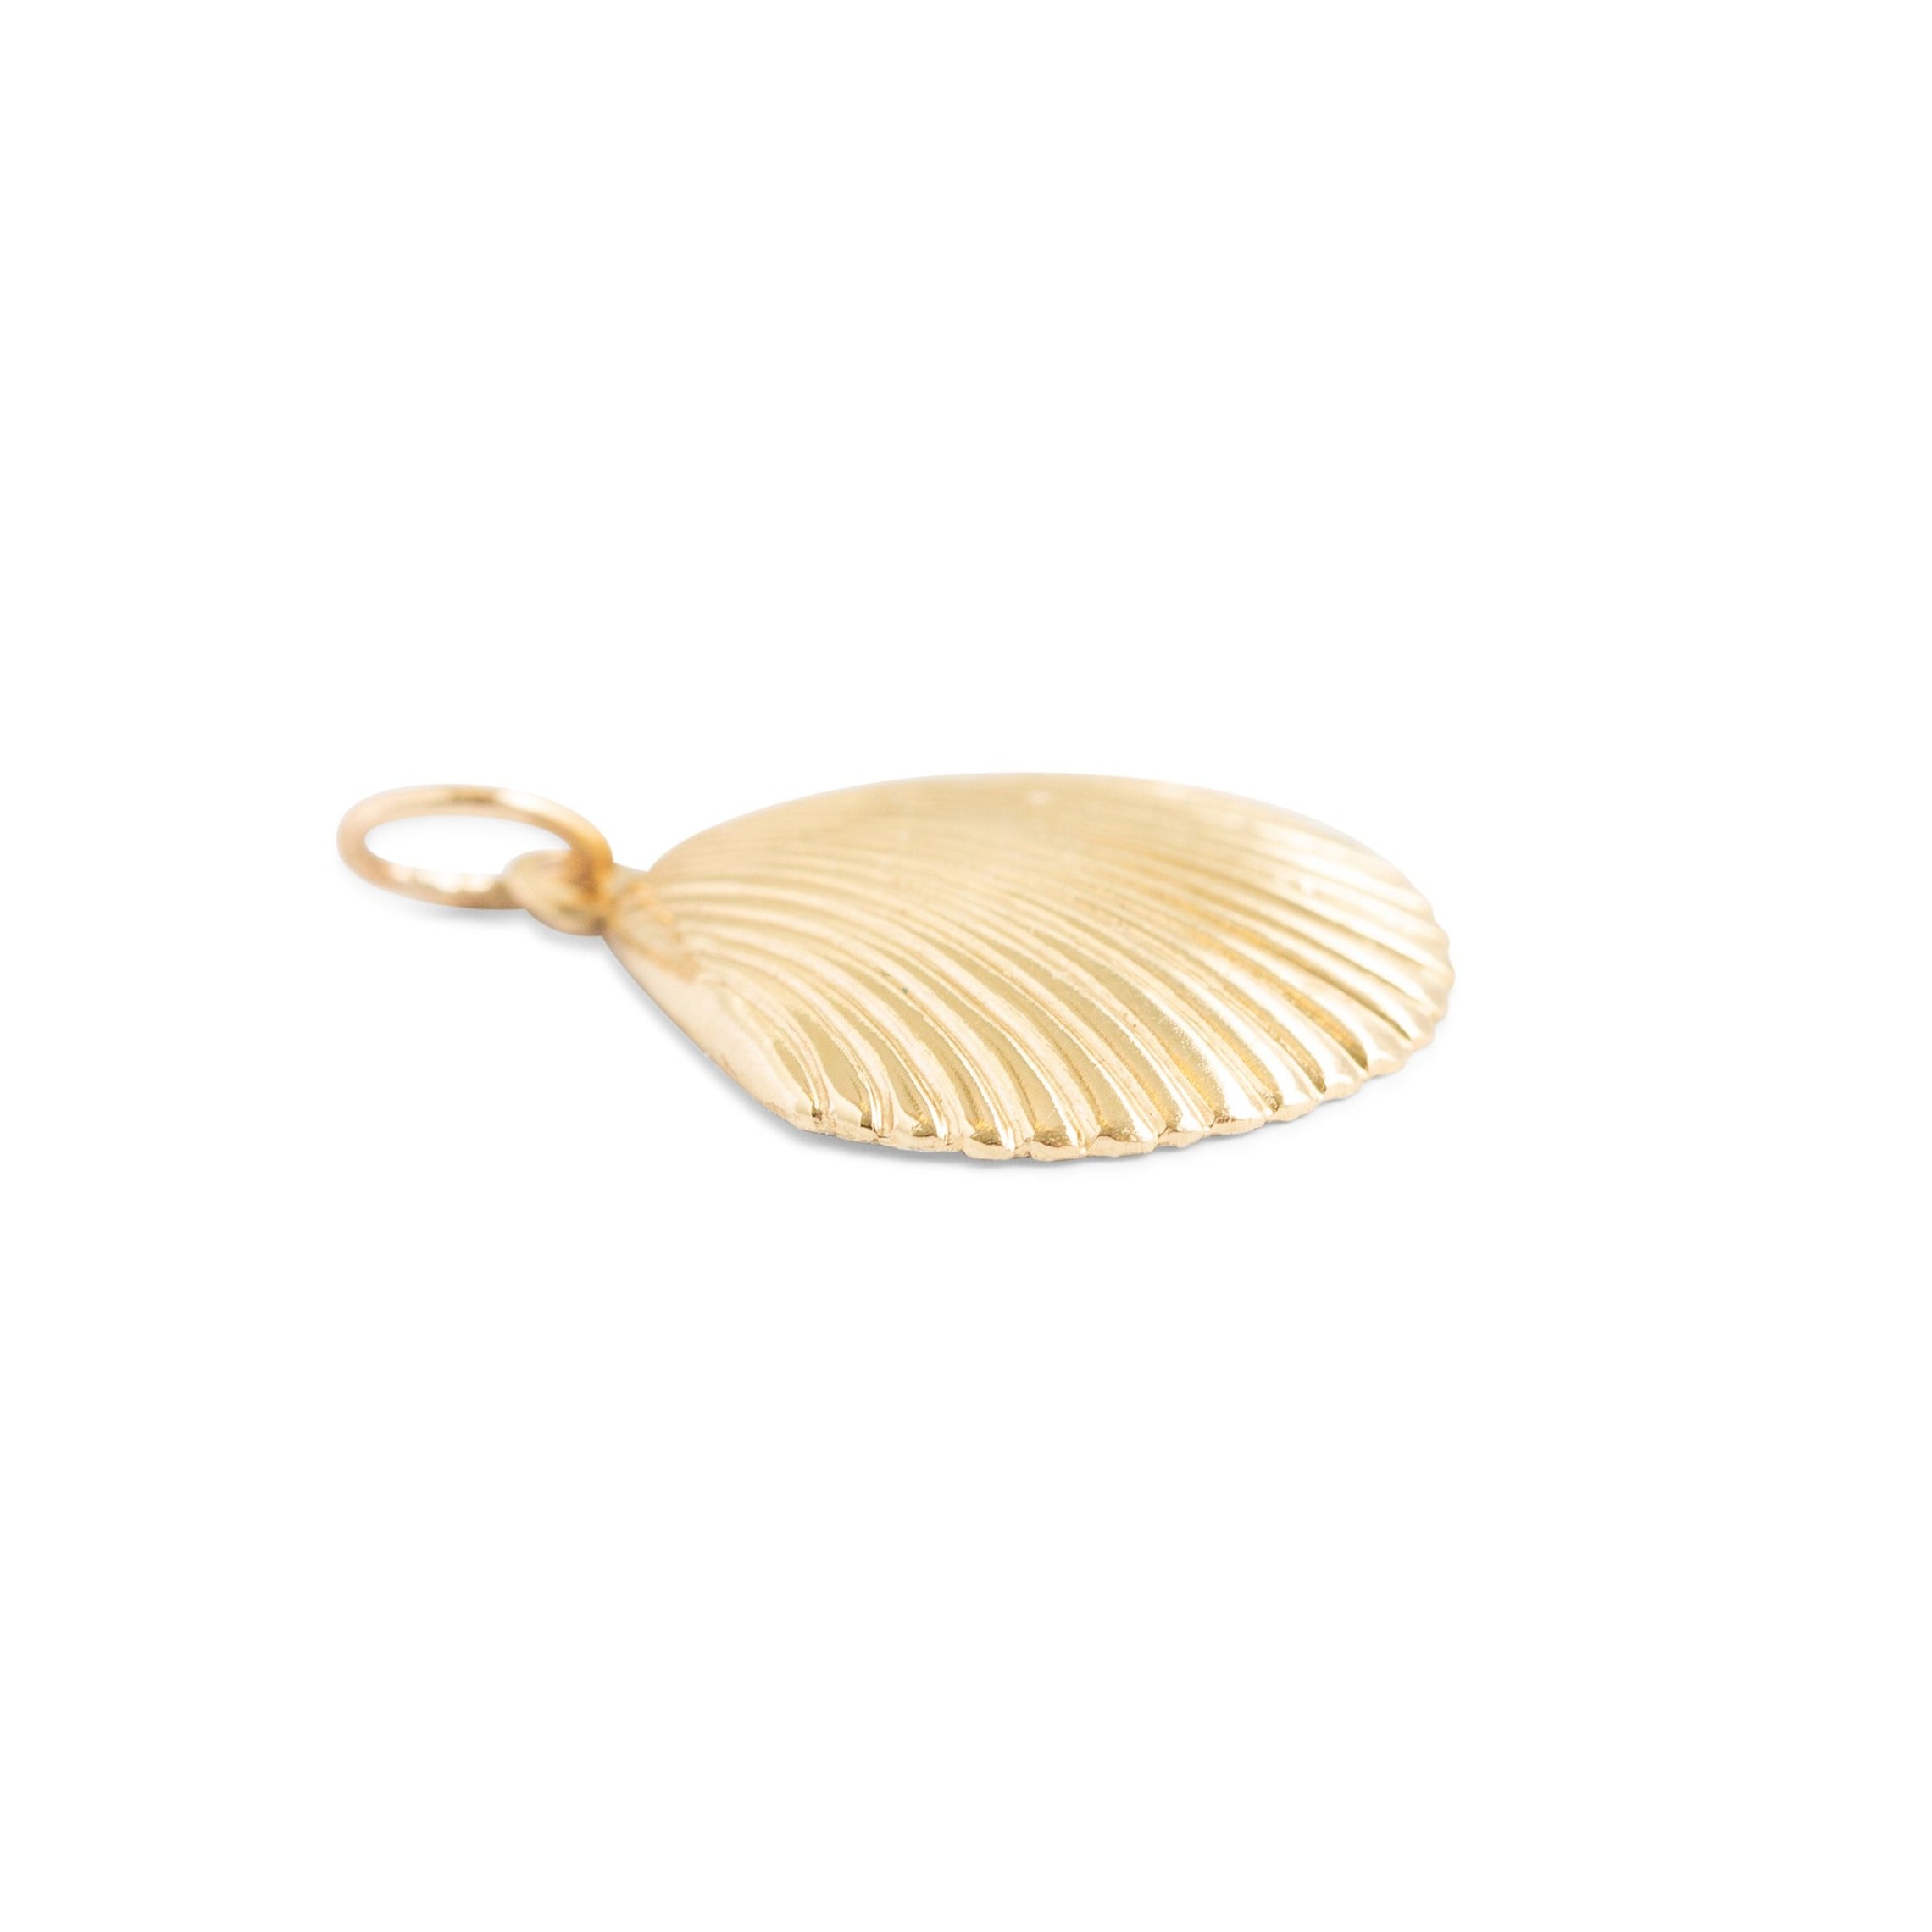 Seashell 14k Yellow Gold Charm